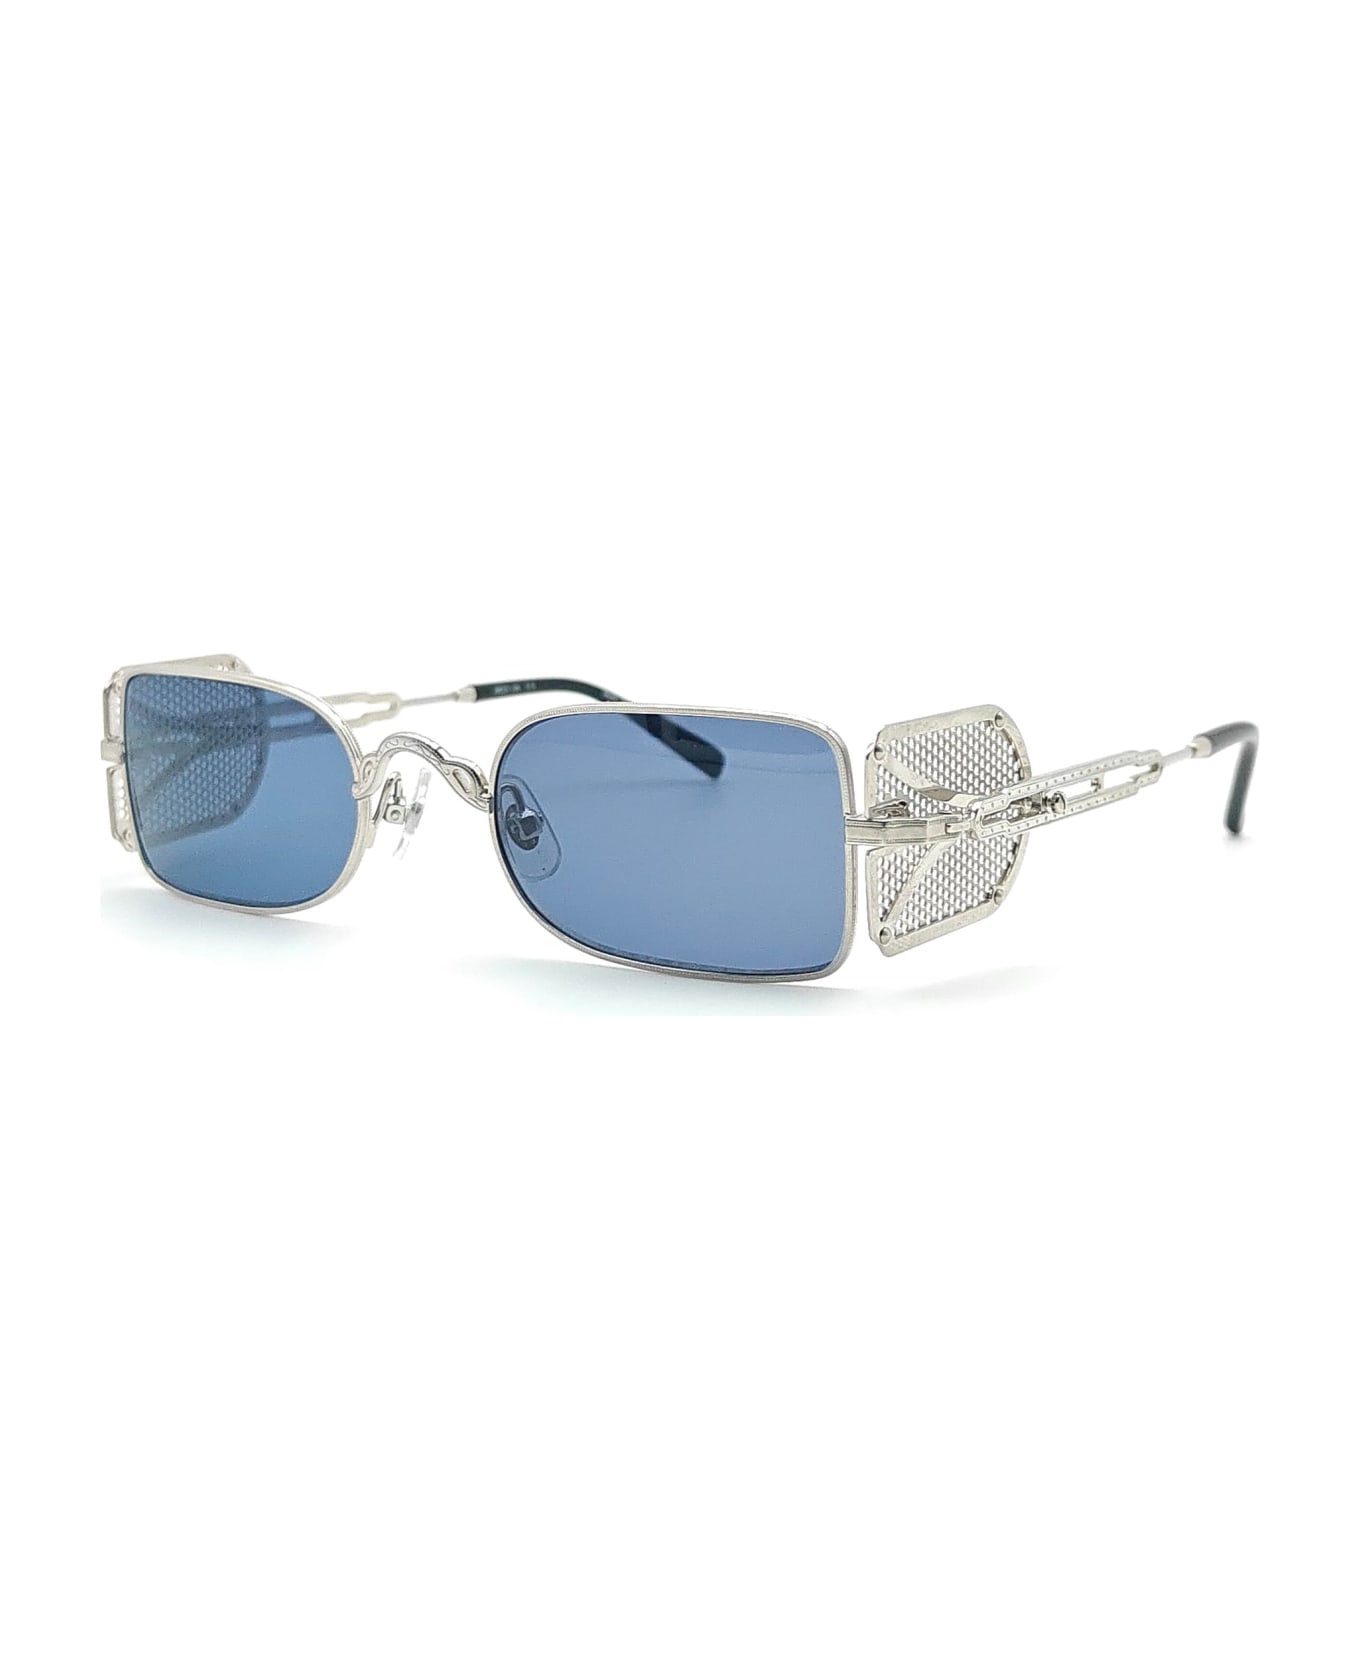 Matsuda 10611h - Palladium White / Brushed Silver Sunglasses - Silver サングラス